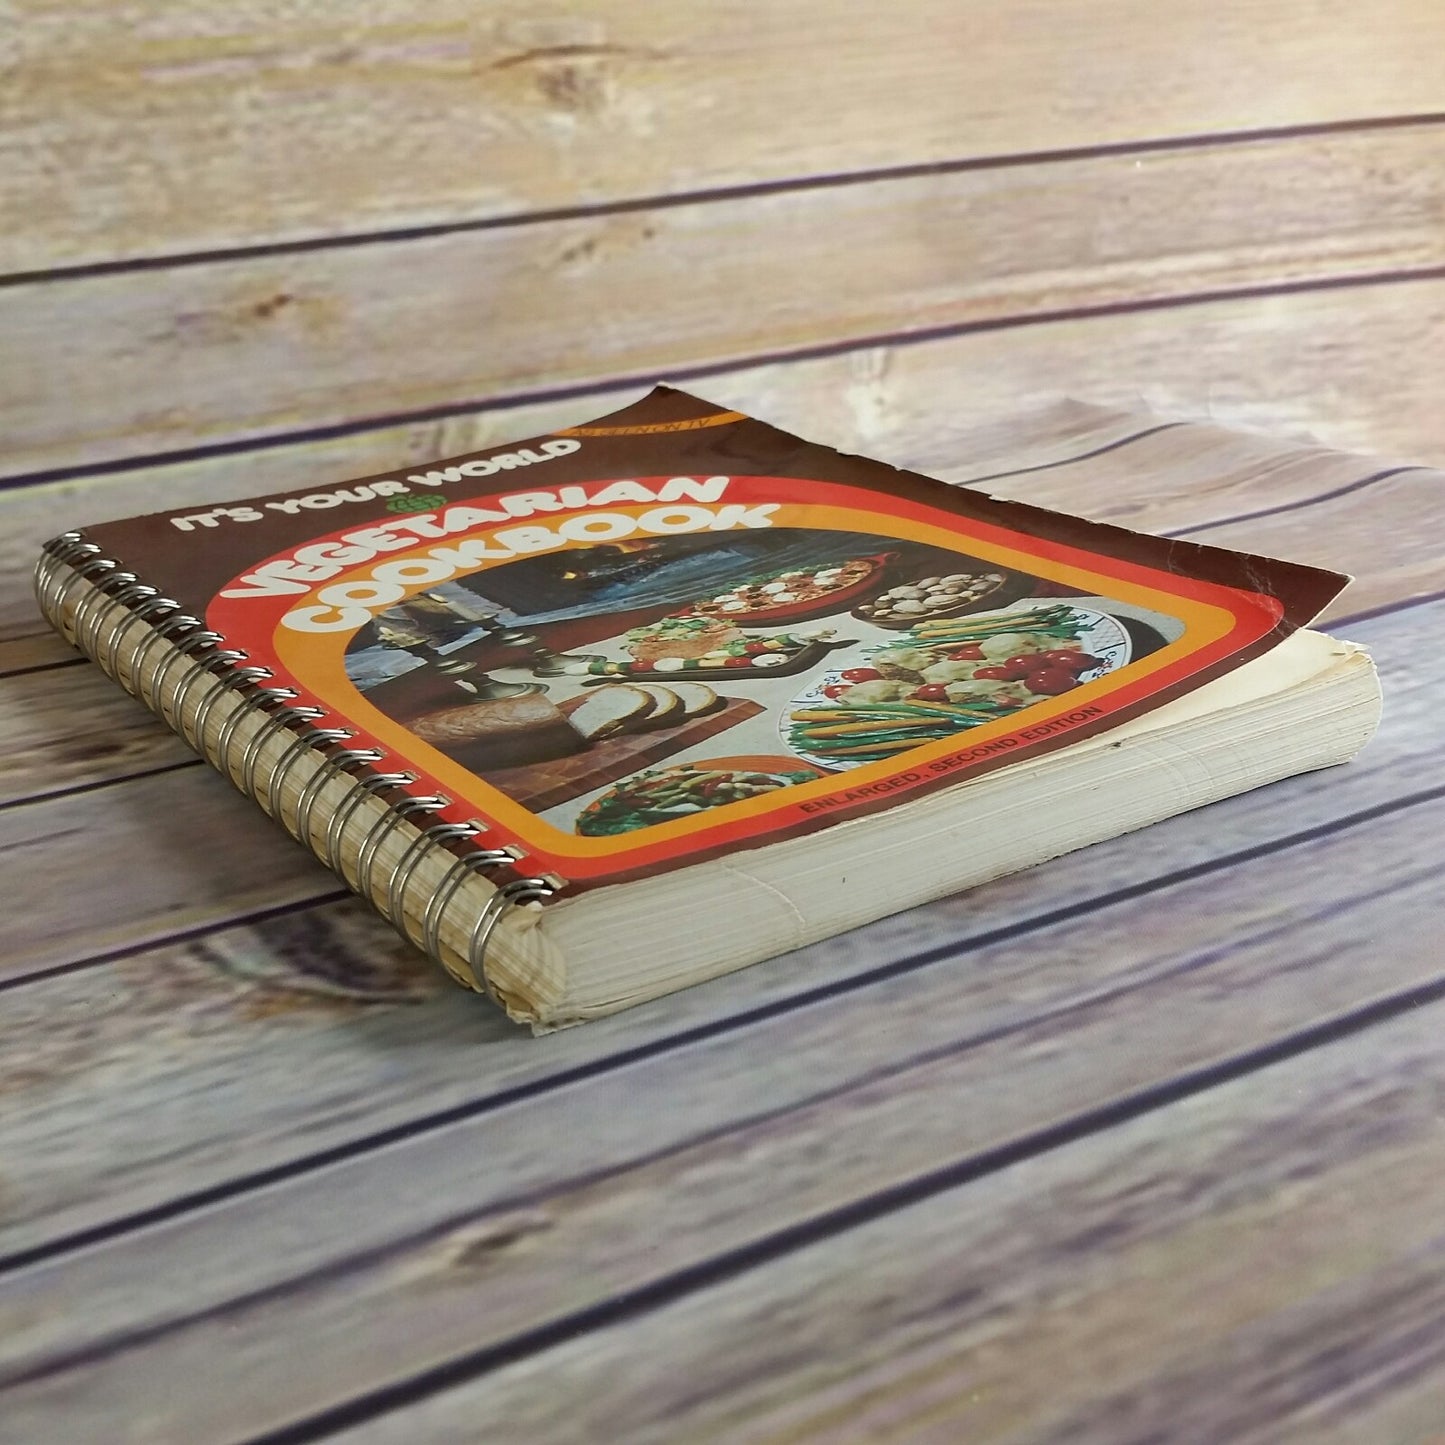 Vintage California Cookbook Vegetarian Its Your World 1981 Loma Linda University Spiral Bound